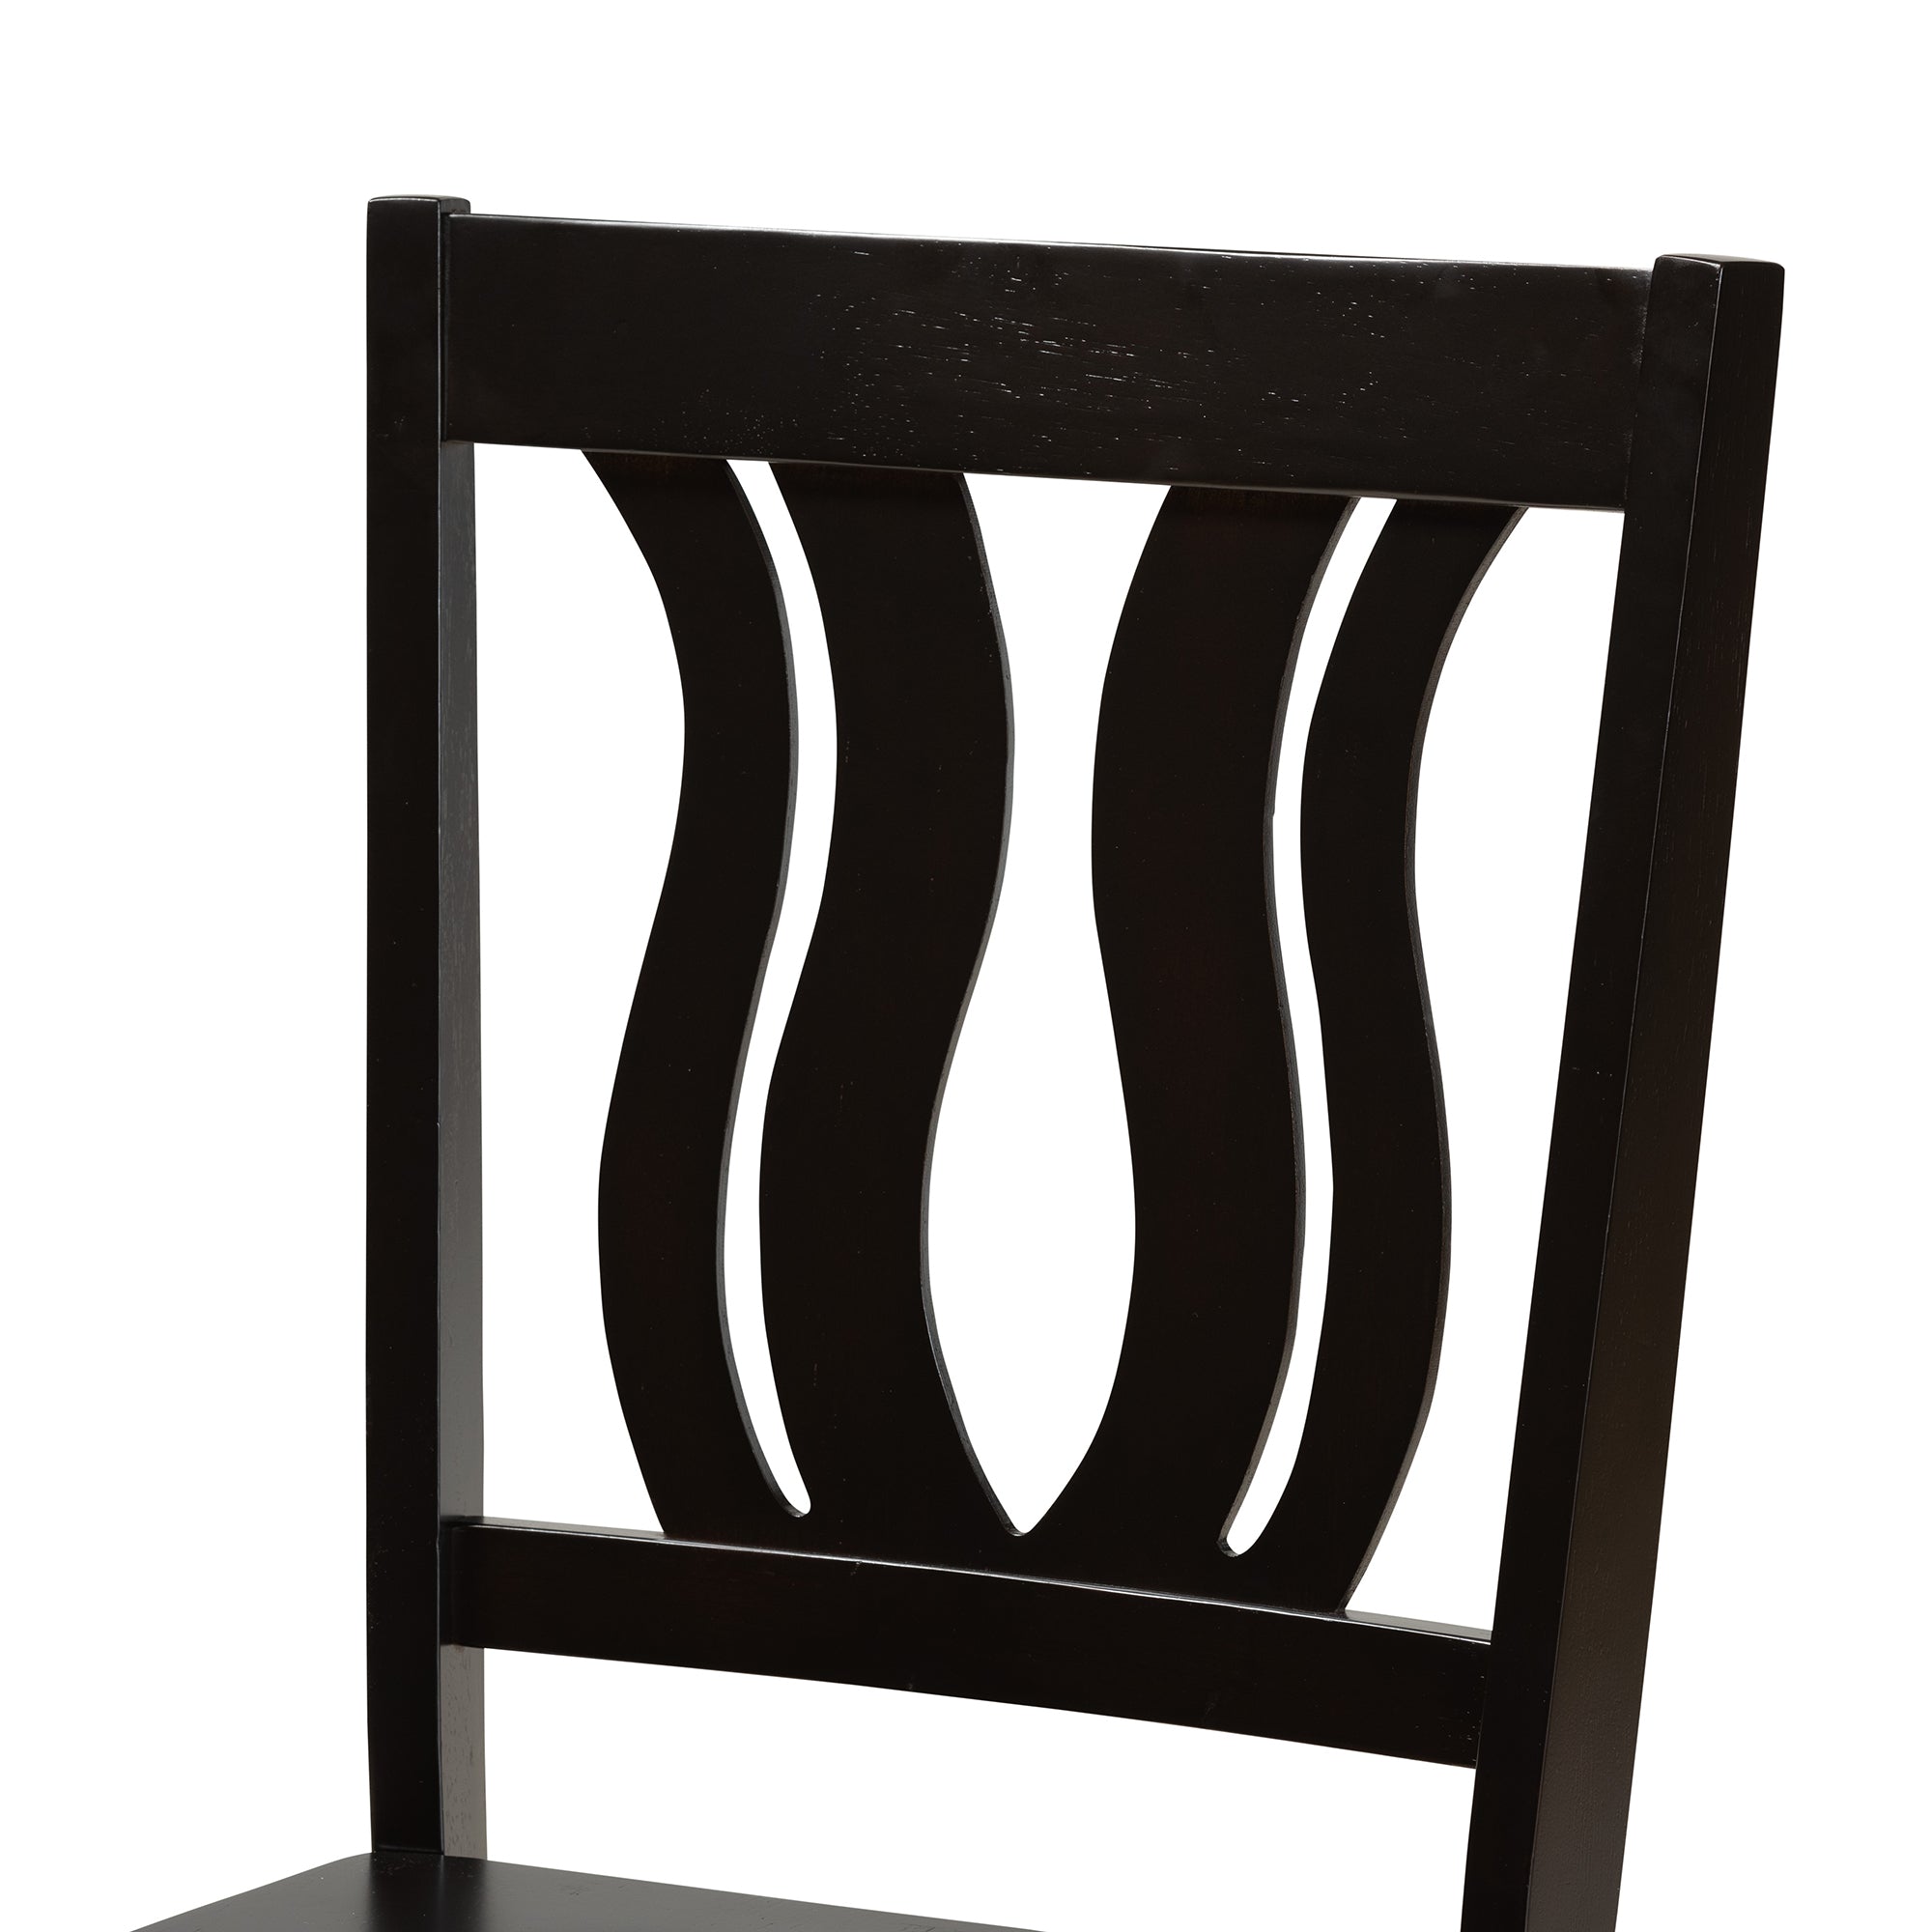 Zamira Modern Table & Dining Chairs 5-Piece-Dining Set-Baxton Studio - WI-Wall2Wall Furnishings